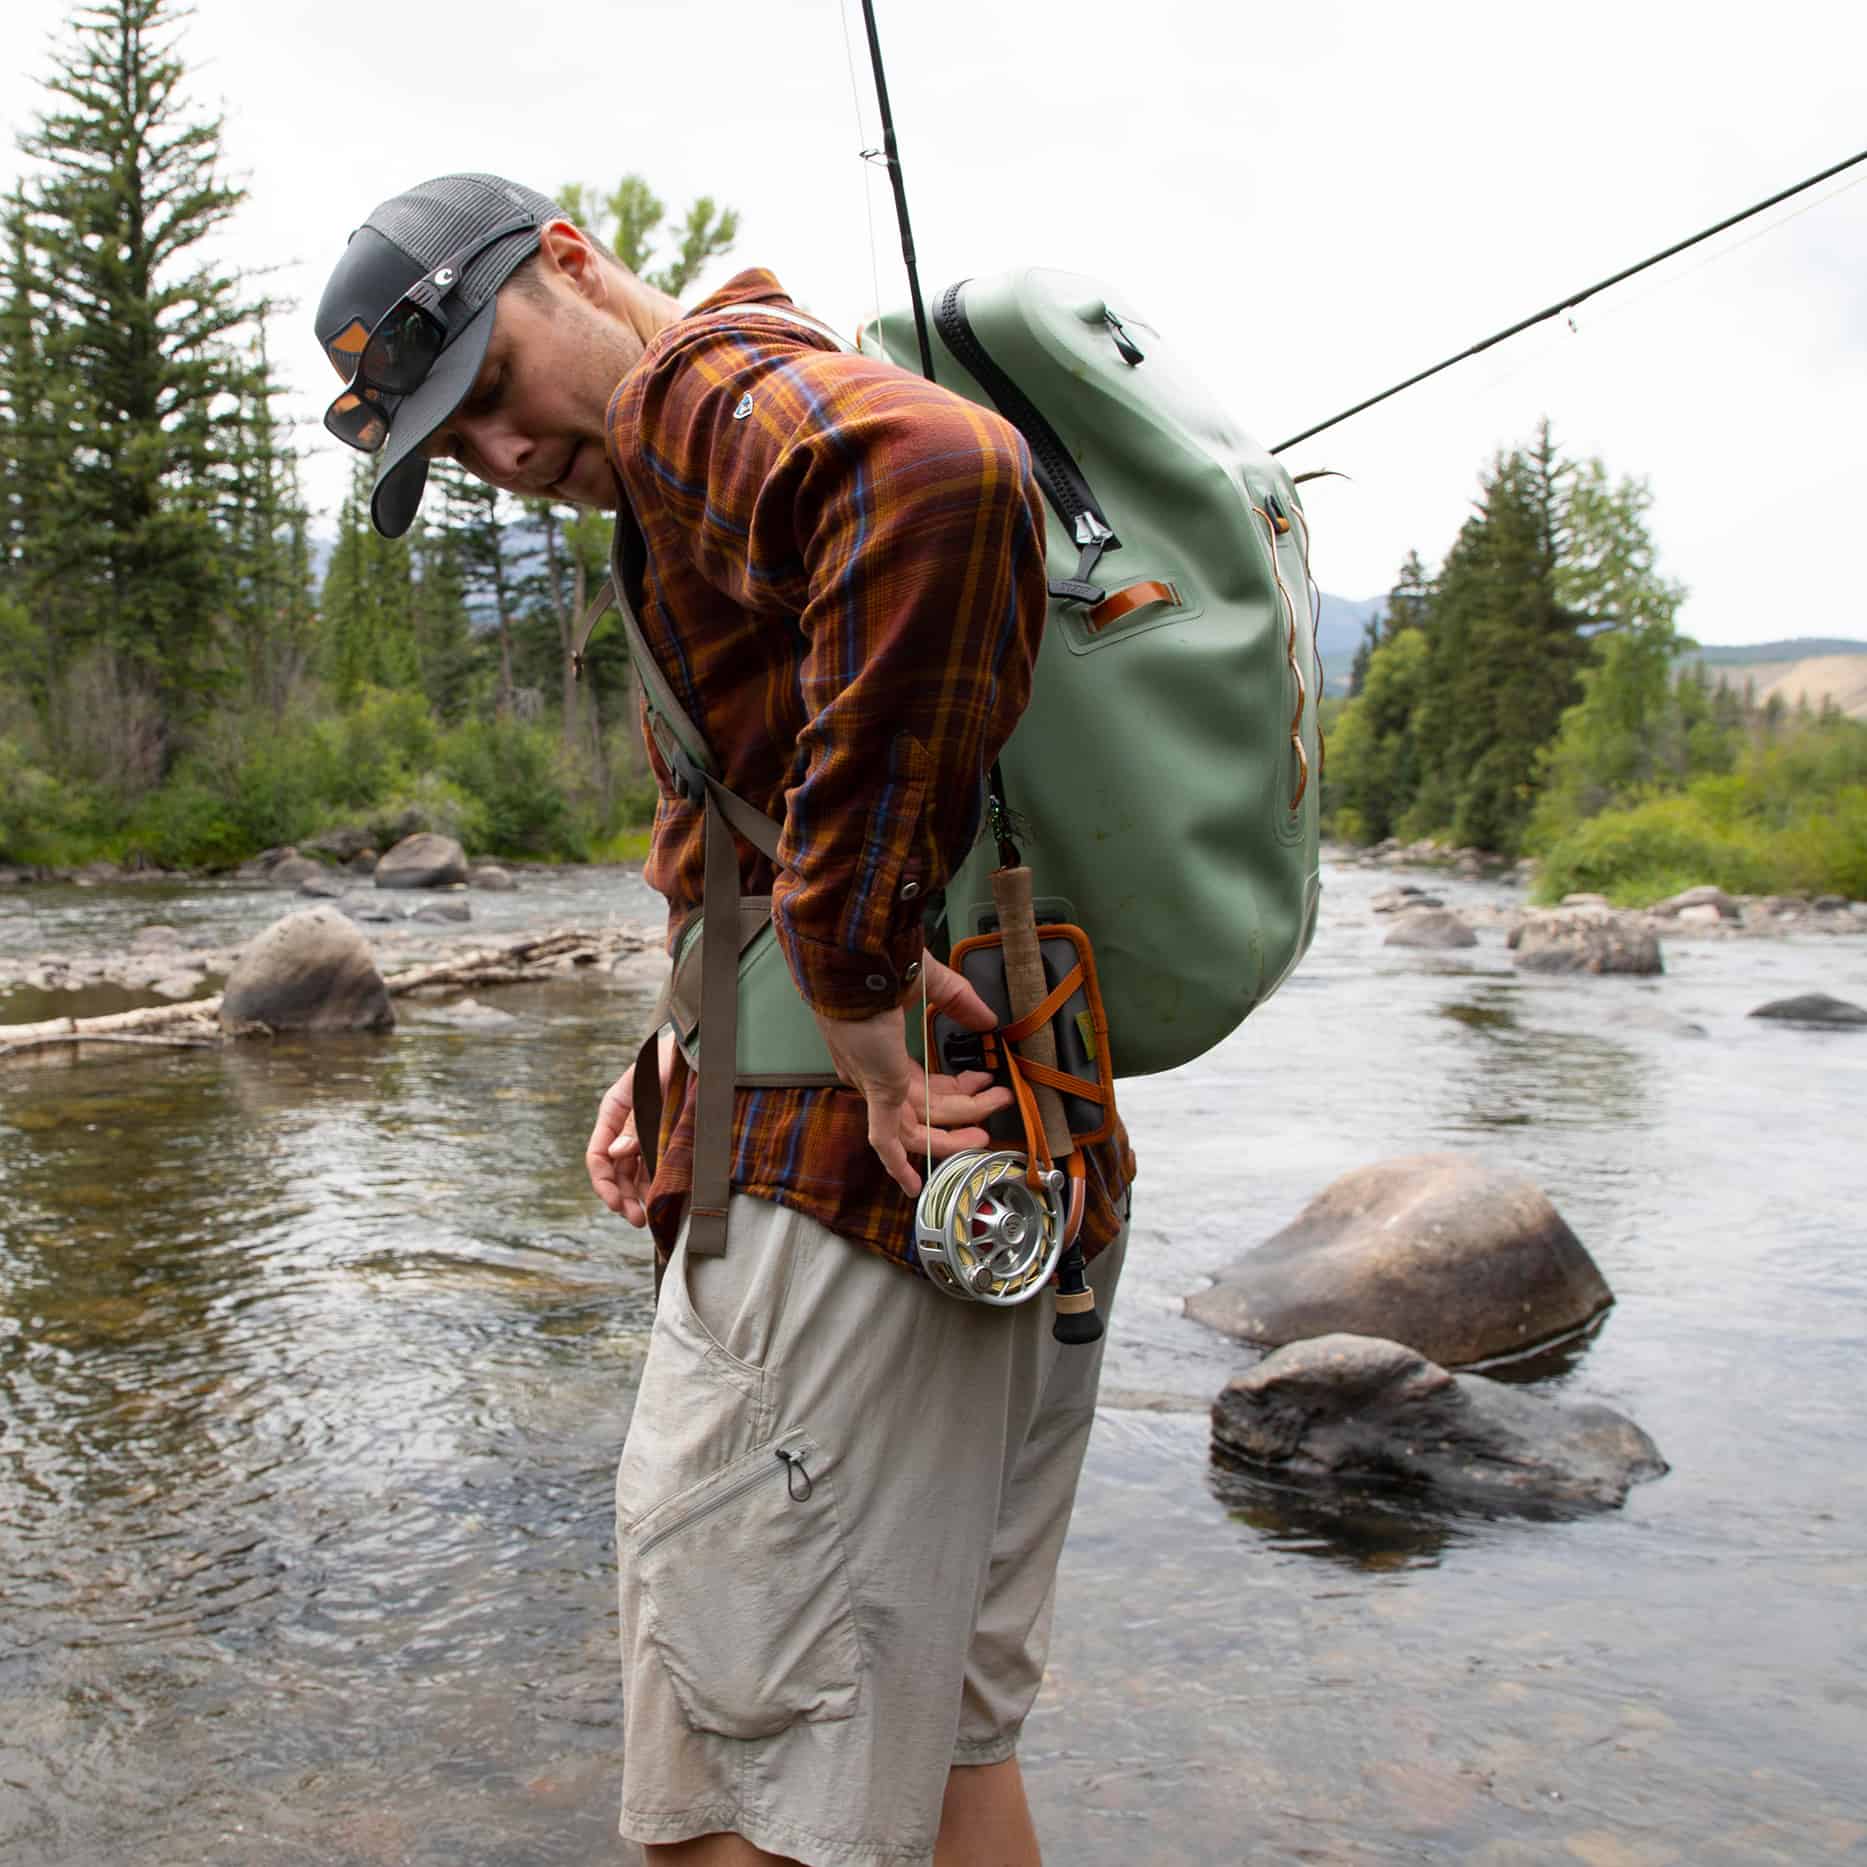 20 Best Fishing Backpacks for 2022 - Man Makes Fire